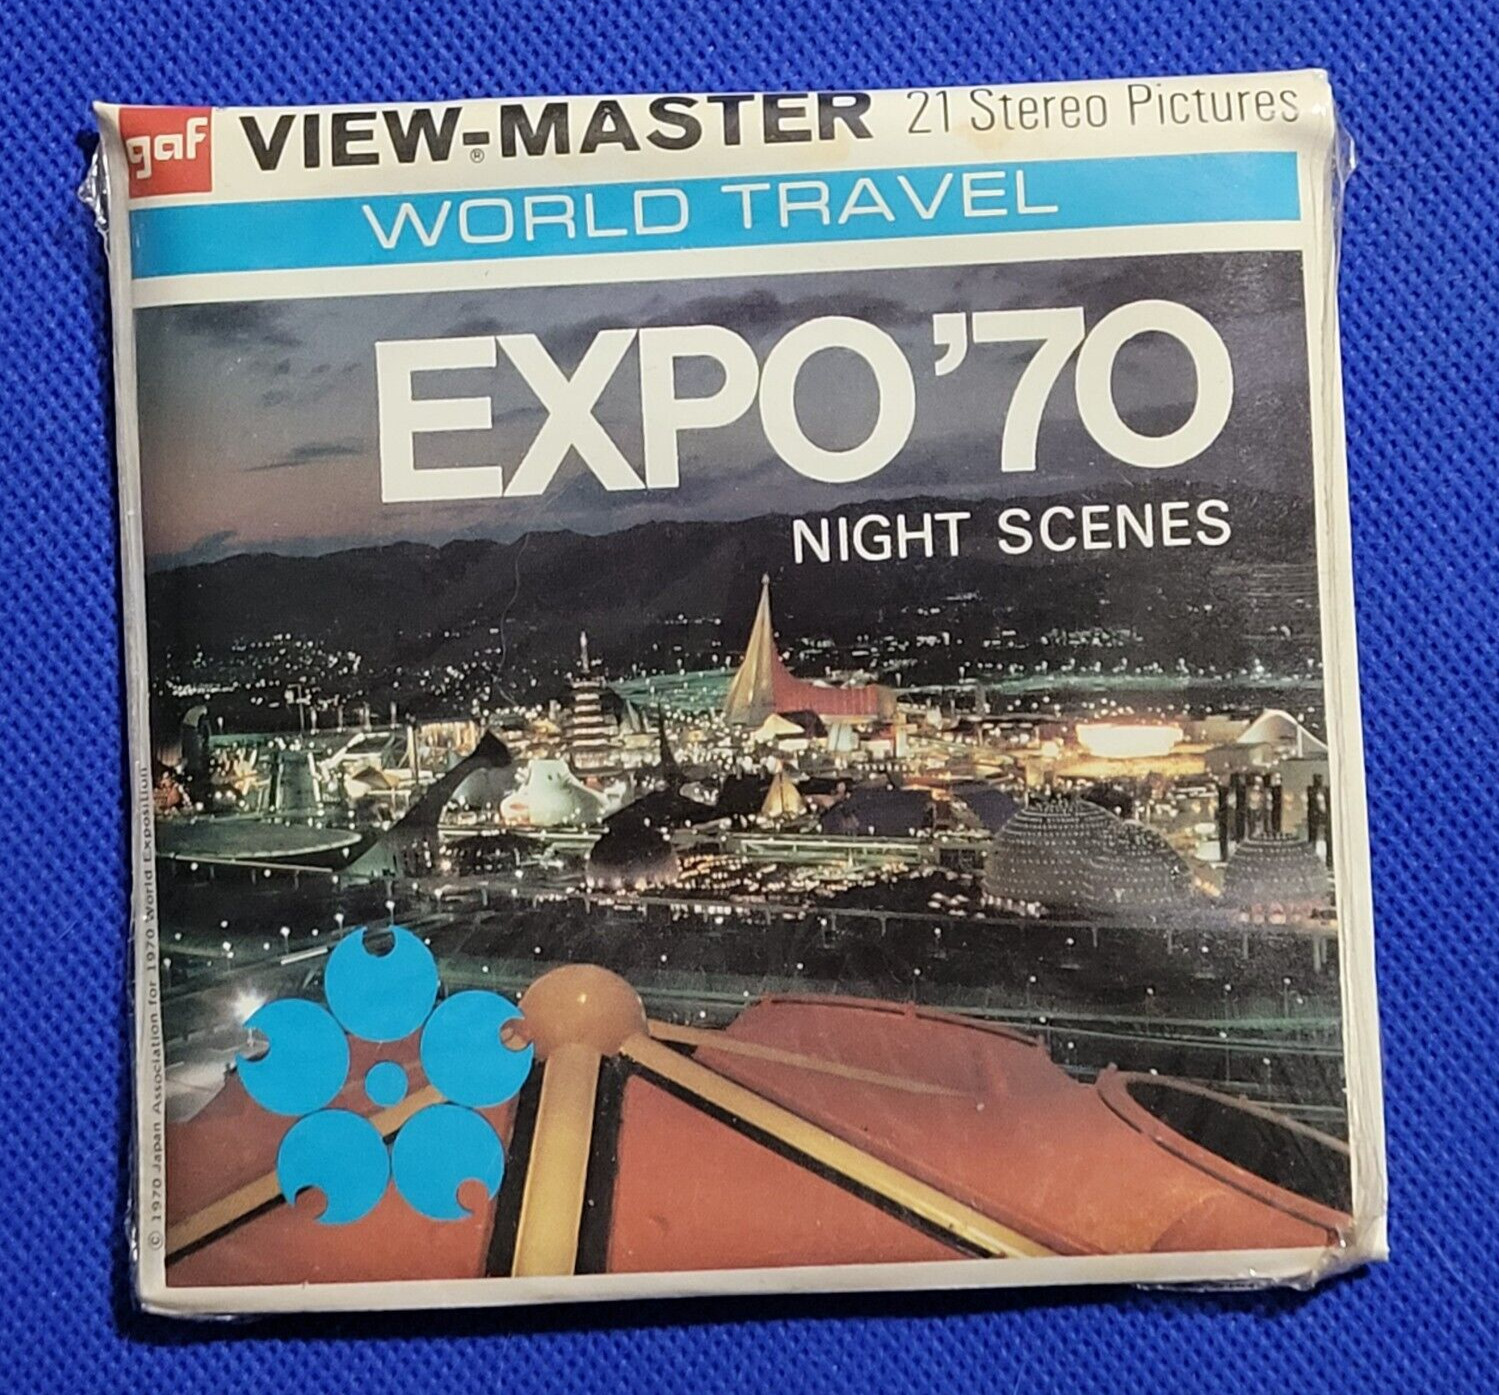 SEALED Gaf B270 Expo 70 Osaka Japan Night Scenes view-master 3 Reels Packet